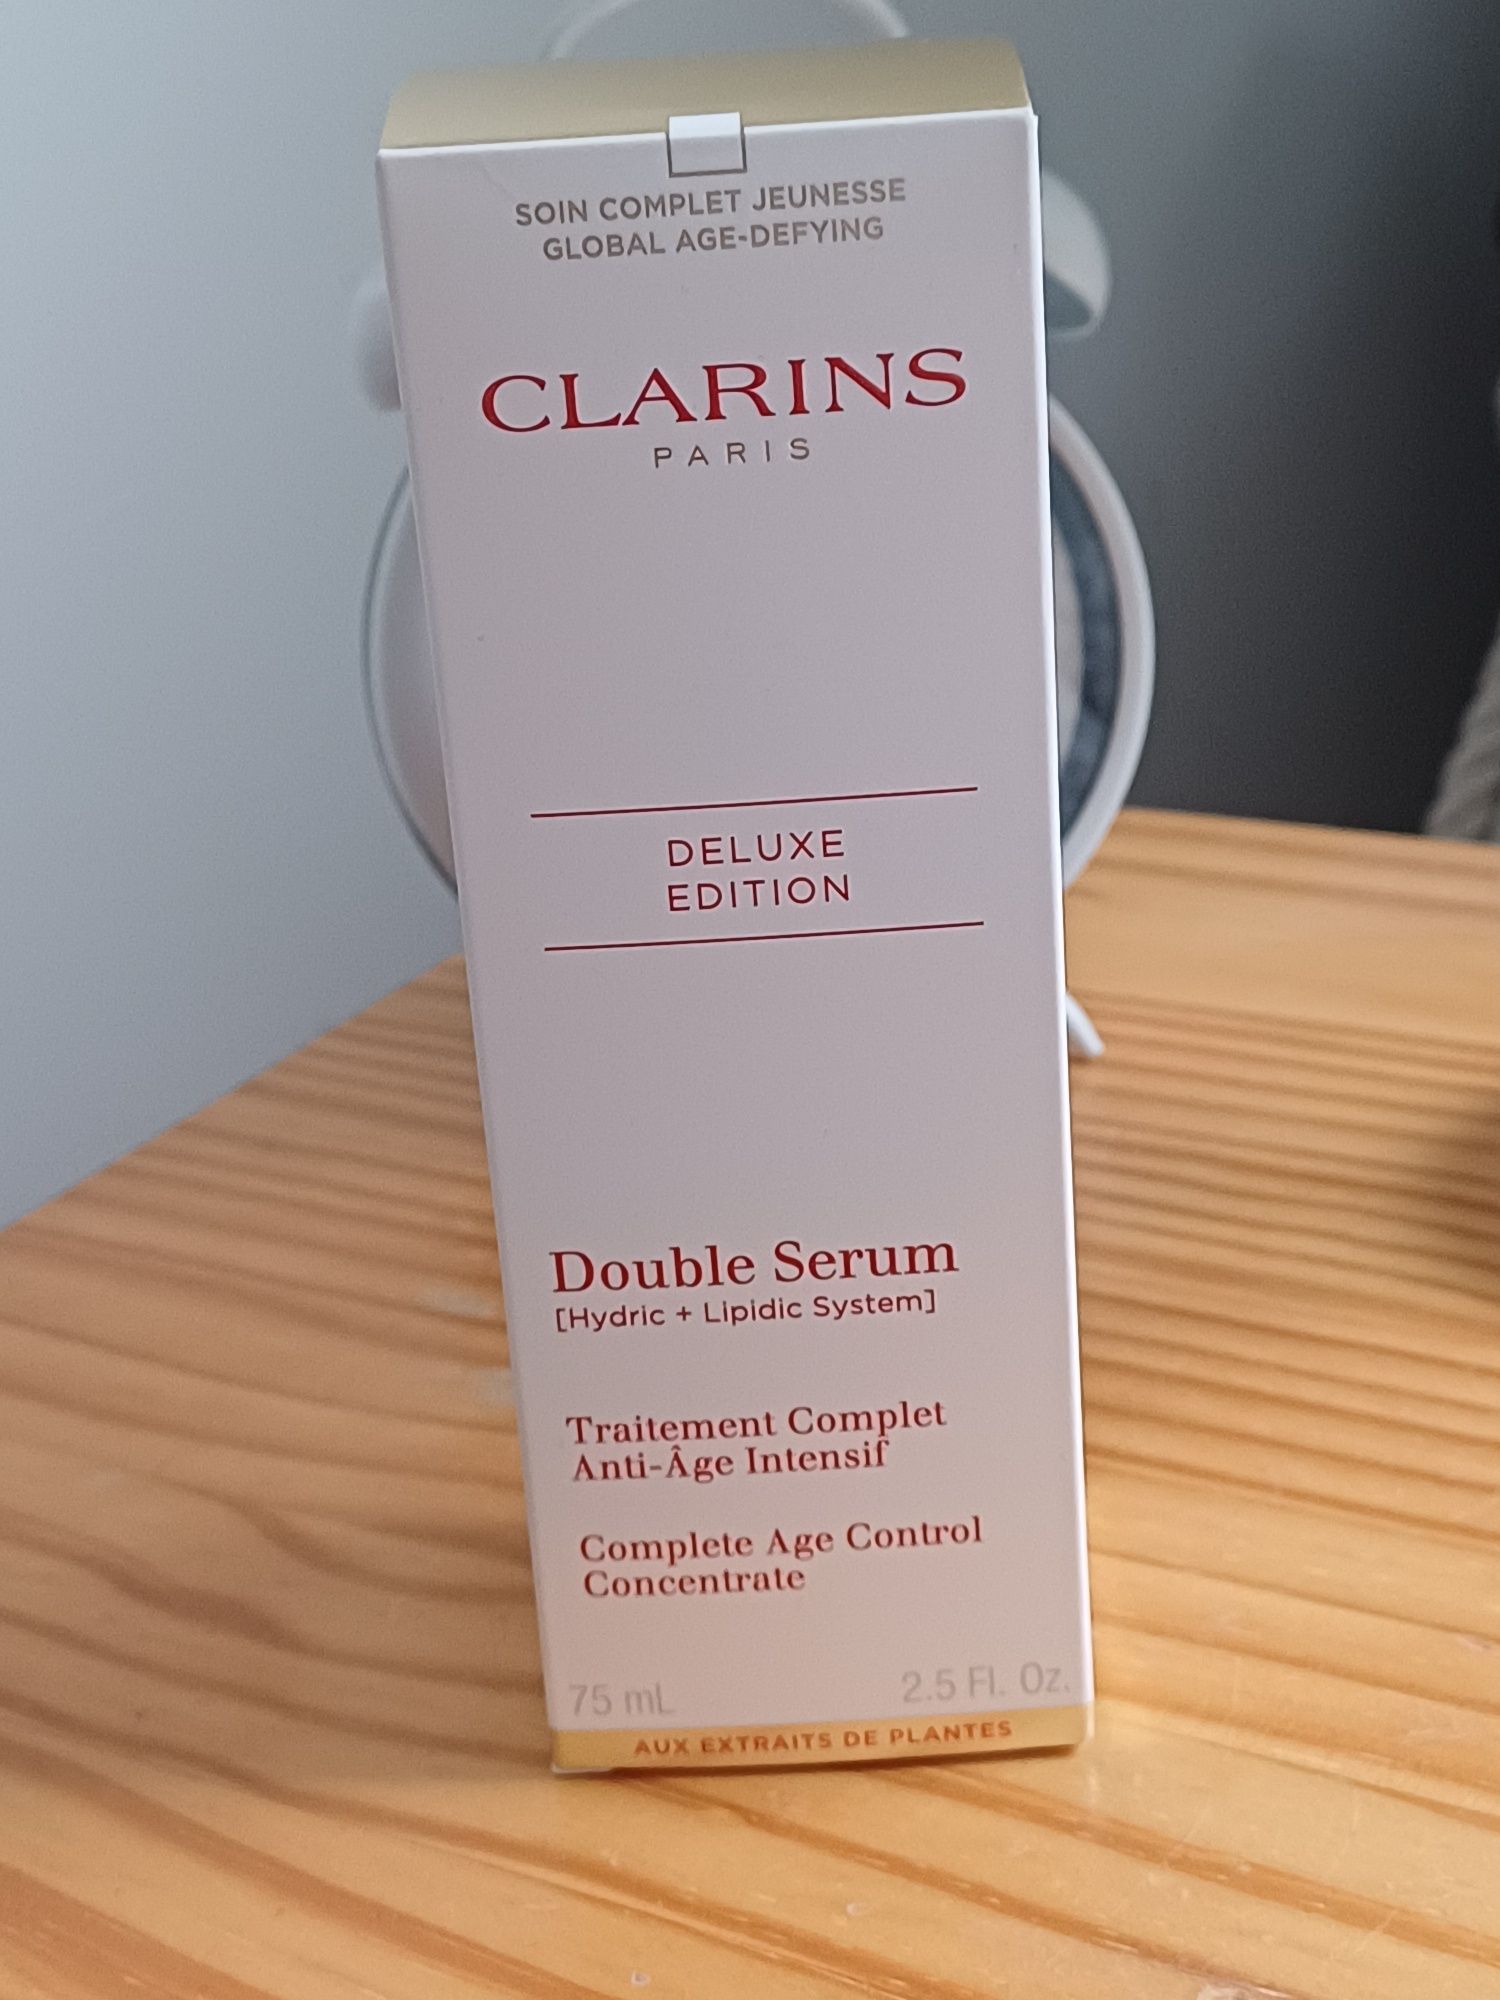 Serum Double Clarins